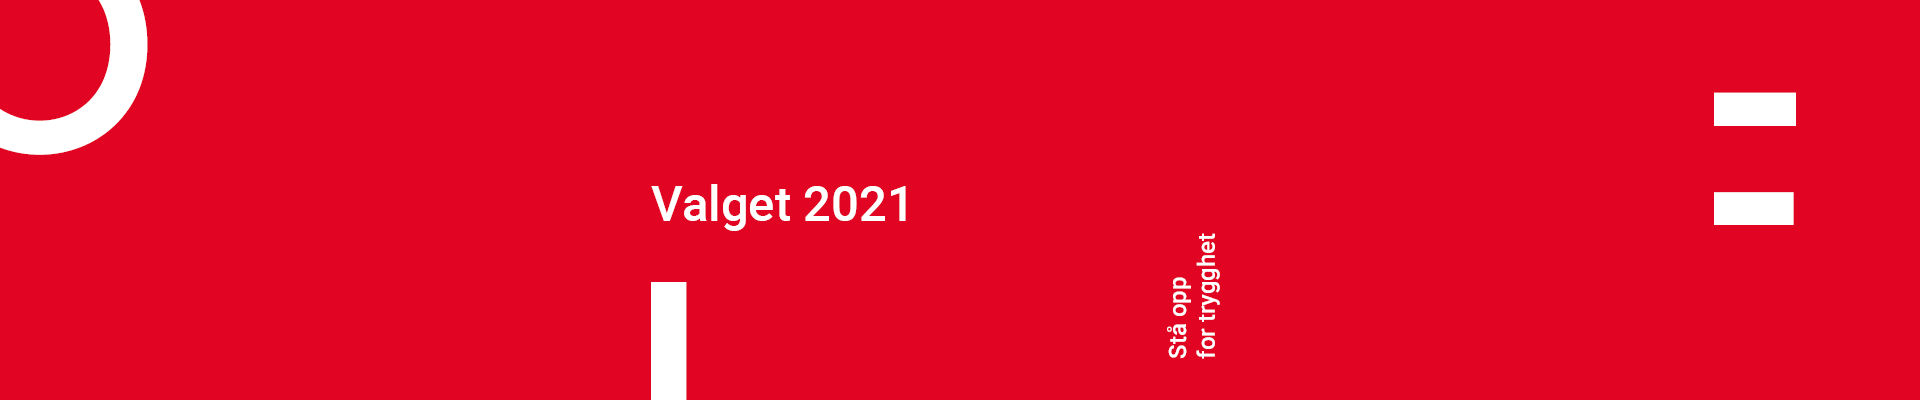 Valget 2021